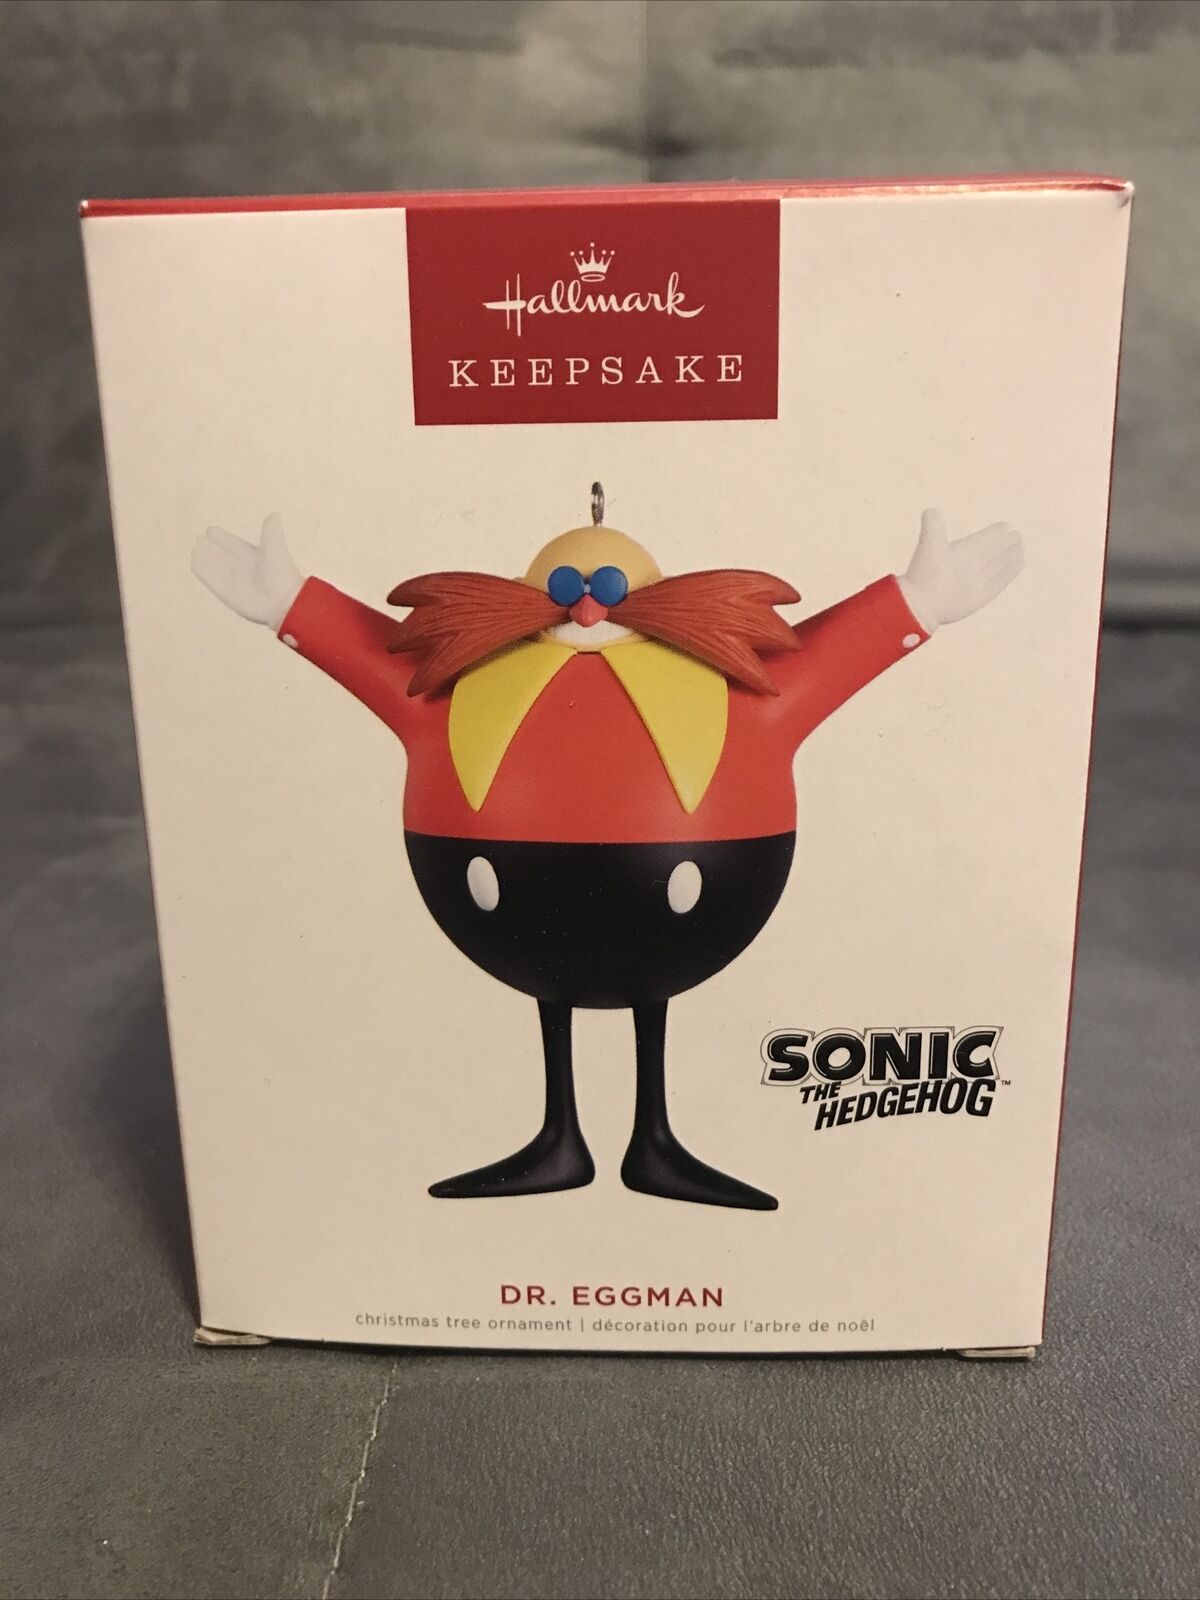 2022 Hallmark Keepsake Ornament DR. EGGMAN Sonic Hedgehog Limited Edition